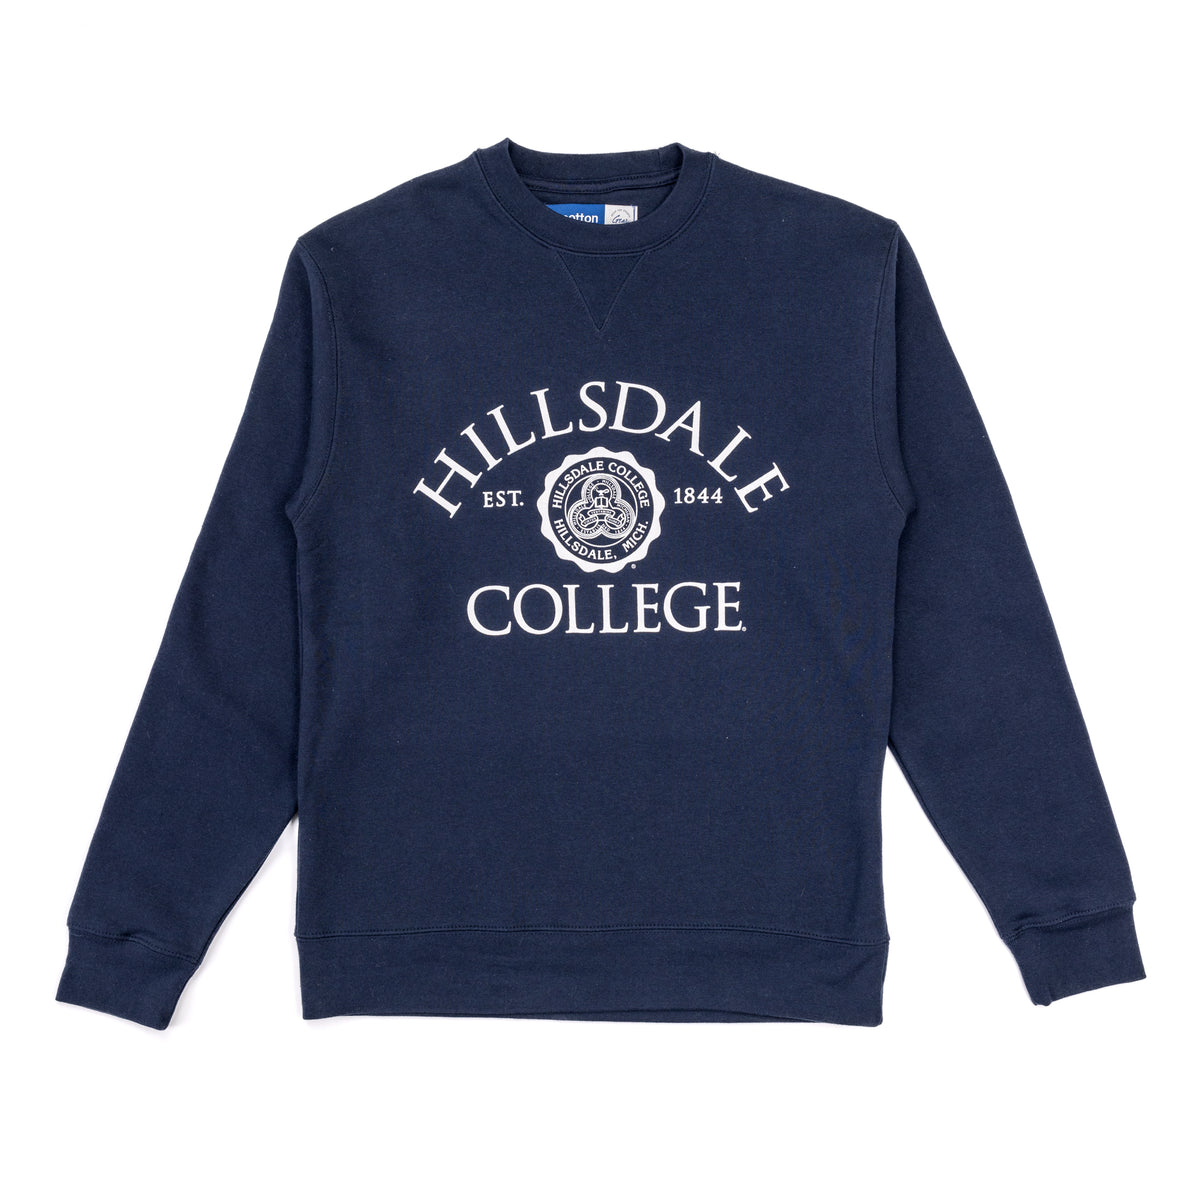 Big Cotton Tumbled Crew – Hillsdale College